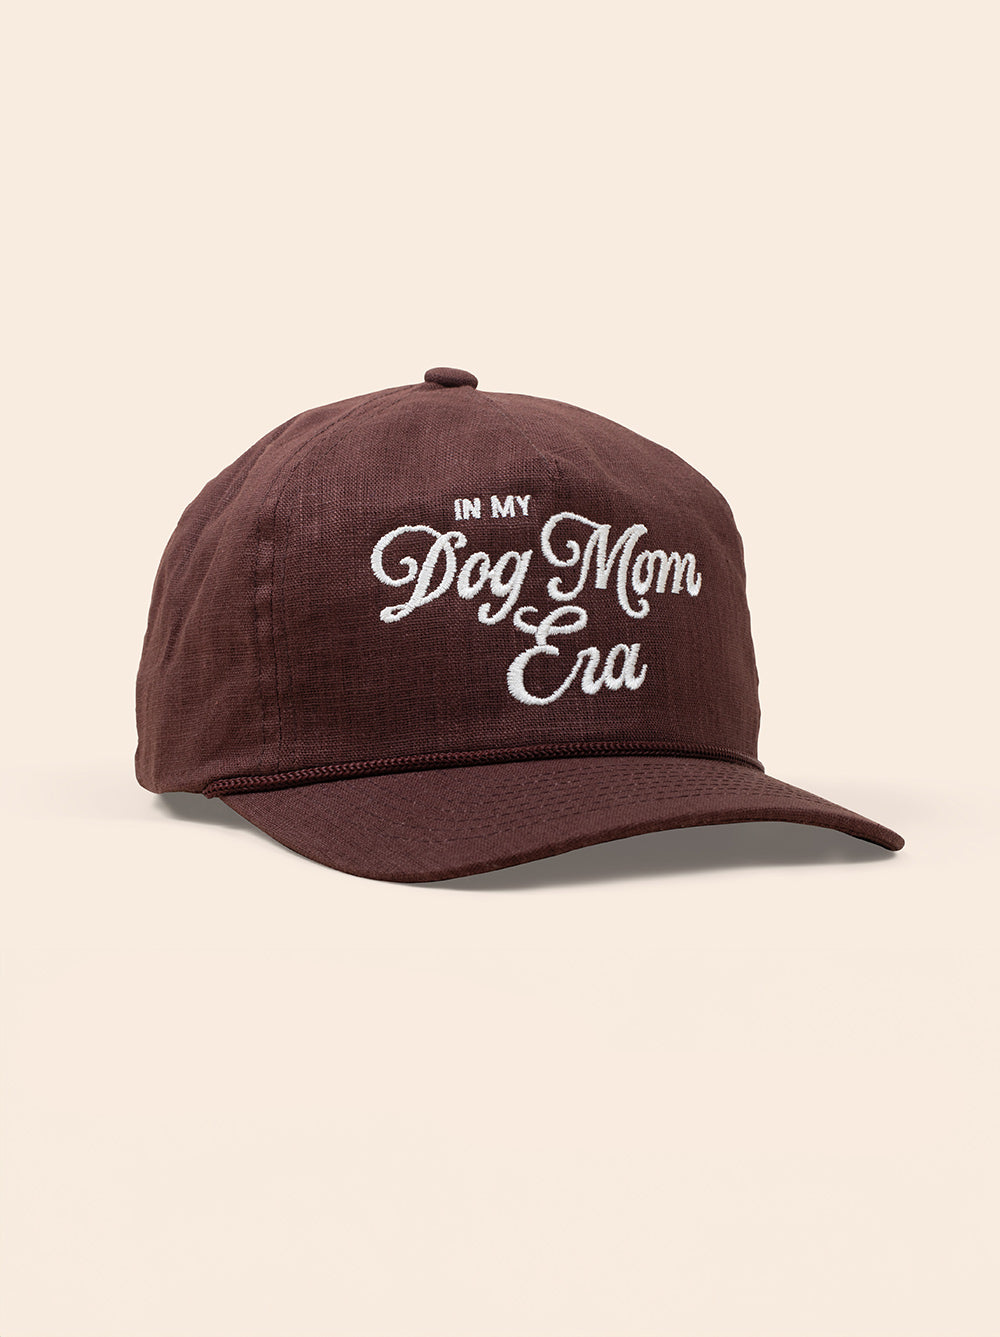 In My Dog Mom Era Hat™